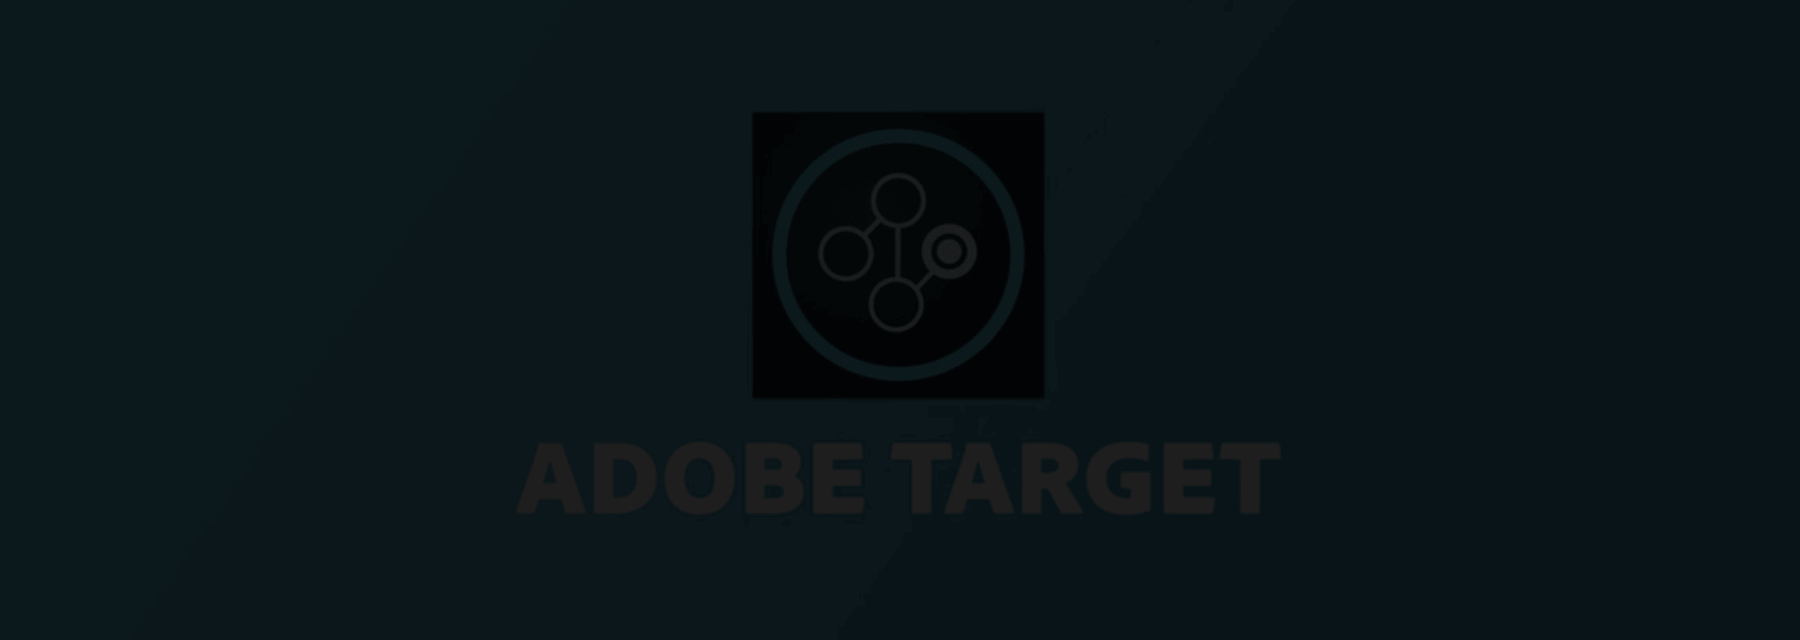 Adobe Test & Target Banner